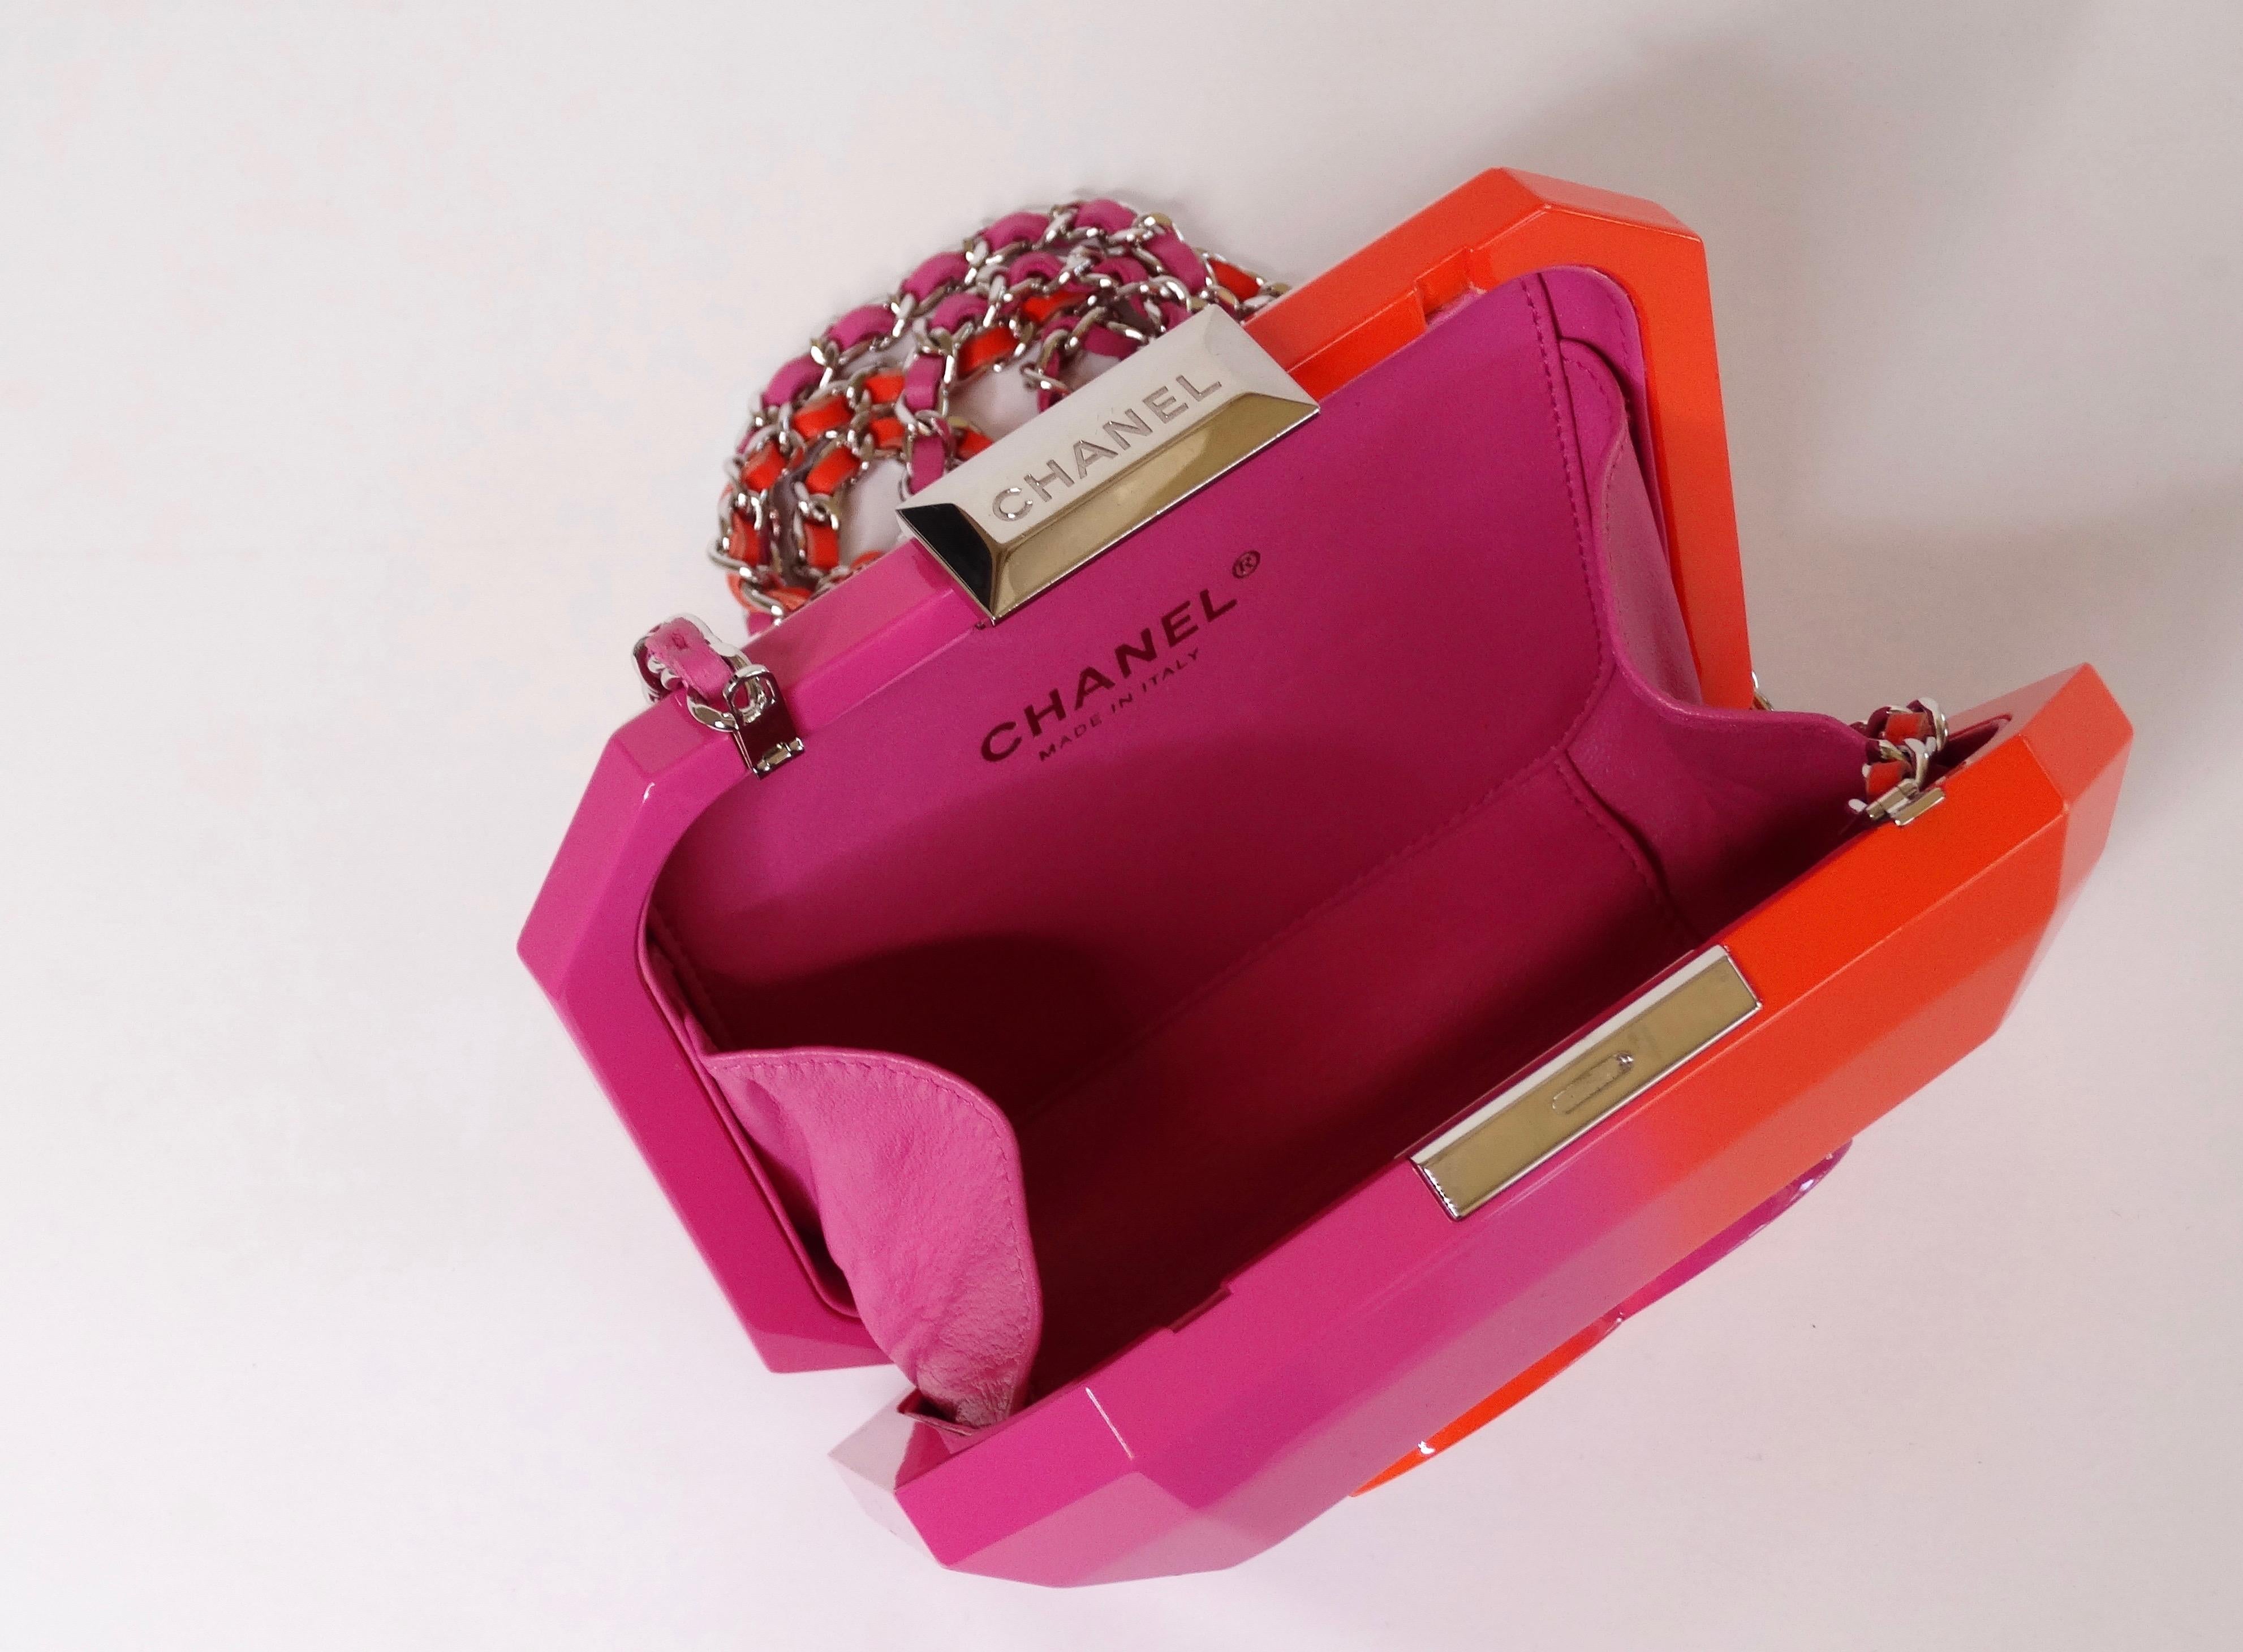 Chanel Runway Minaudière Ombre Pink & Orange Hard Shell Handbag 7